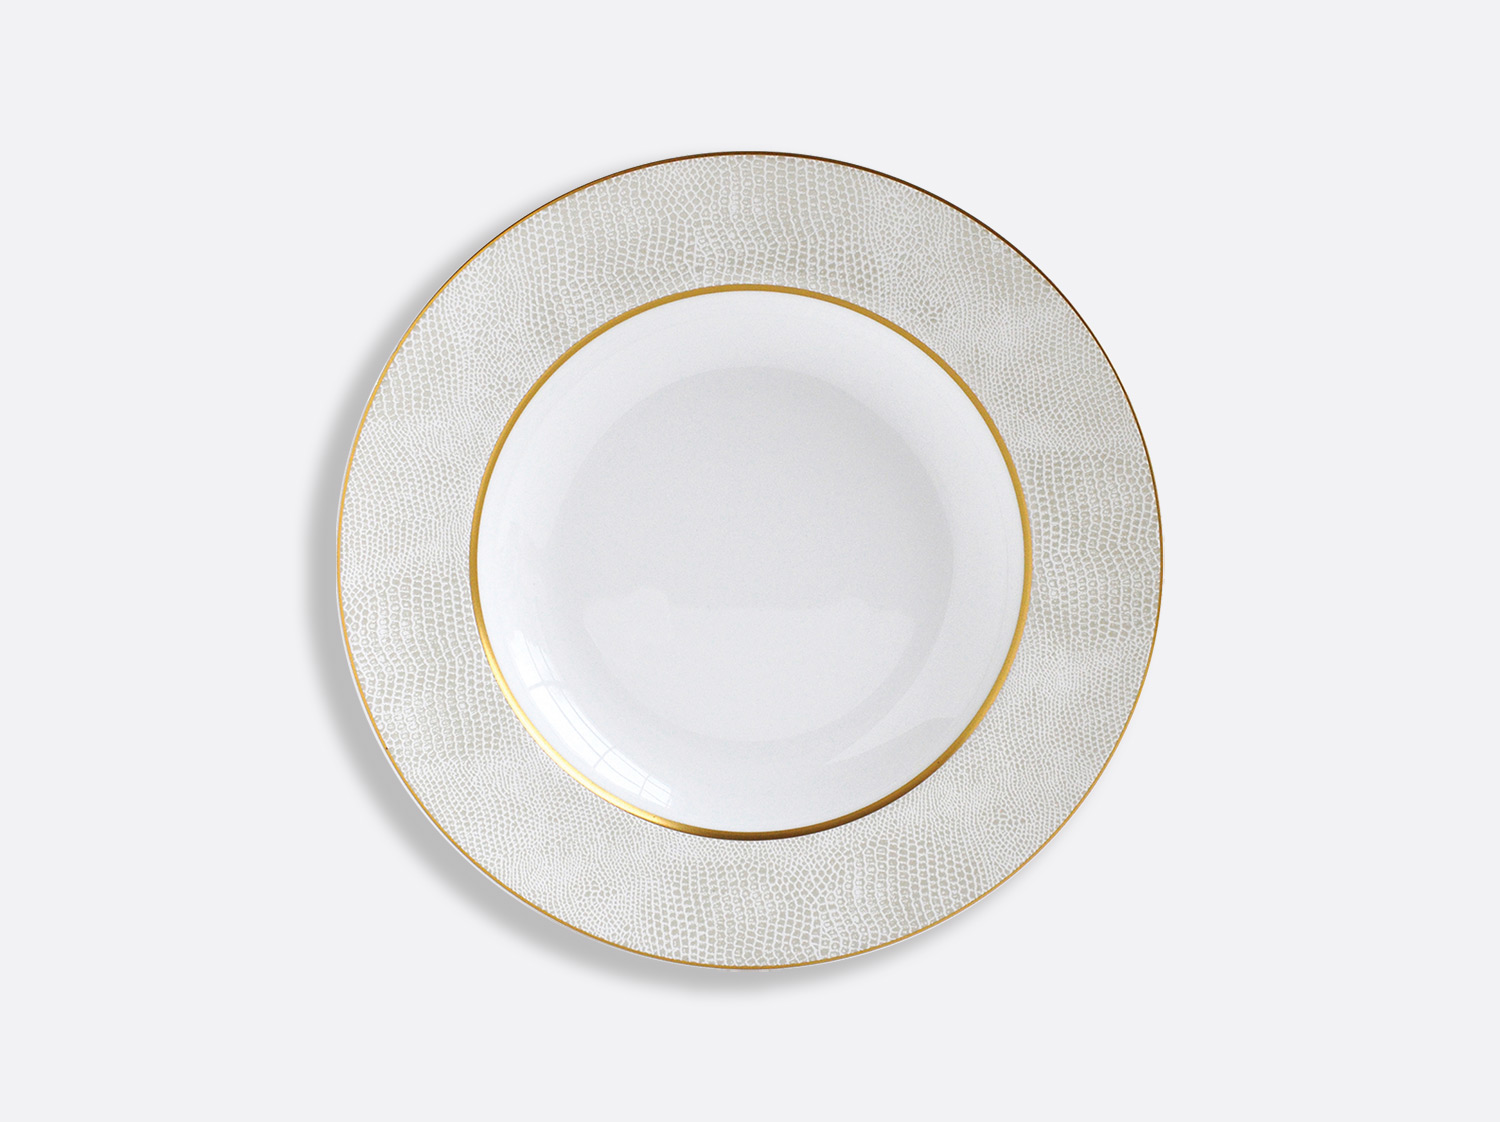 China Rim soup 9" of the collection Sauvage Or Blanc | Bernardaud